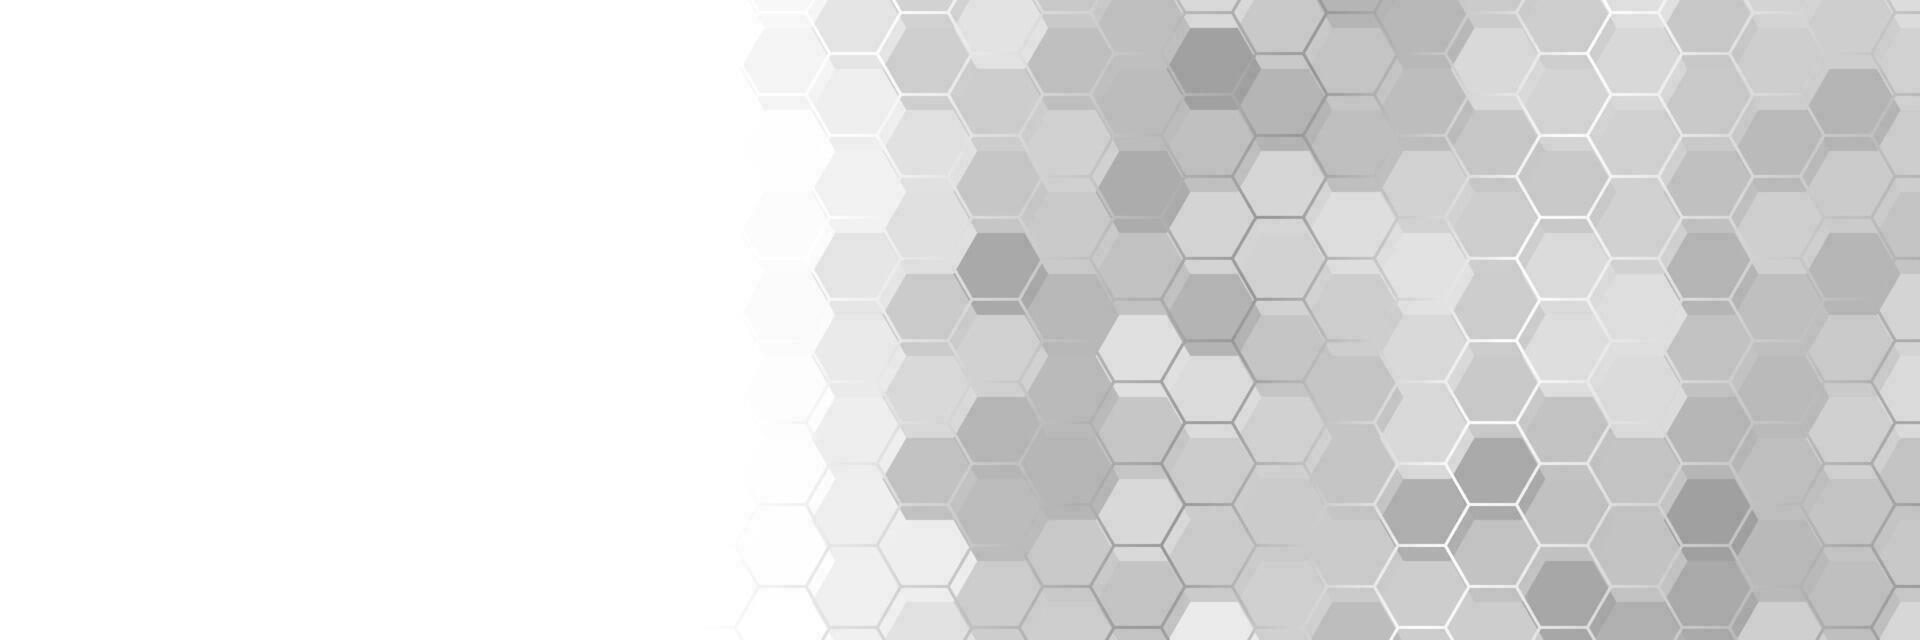 moderno futuro elegante geometrico bianca grigio sfondo vettore